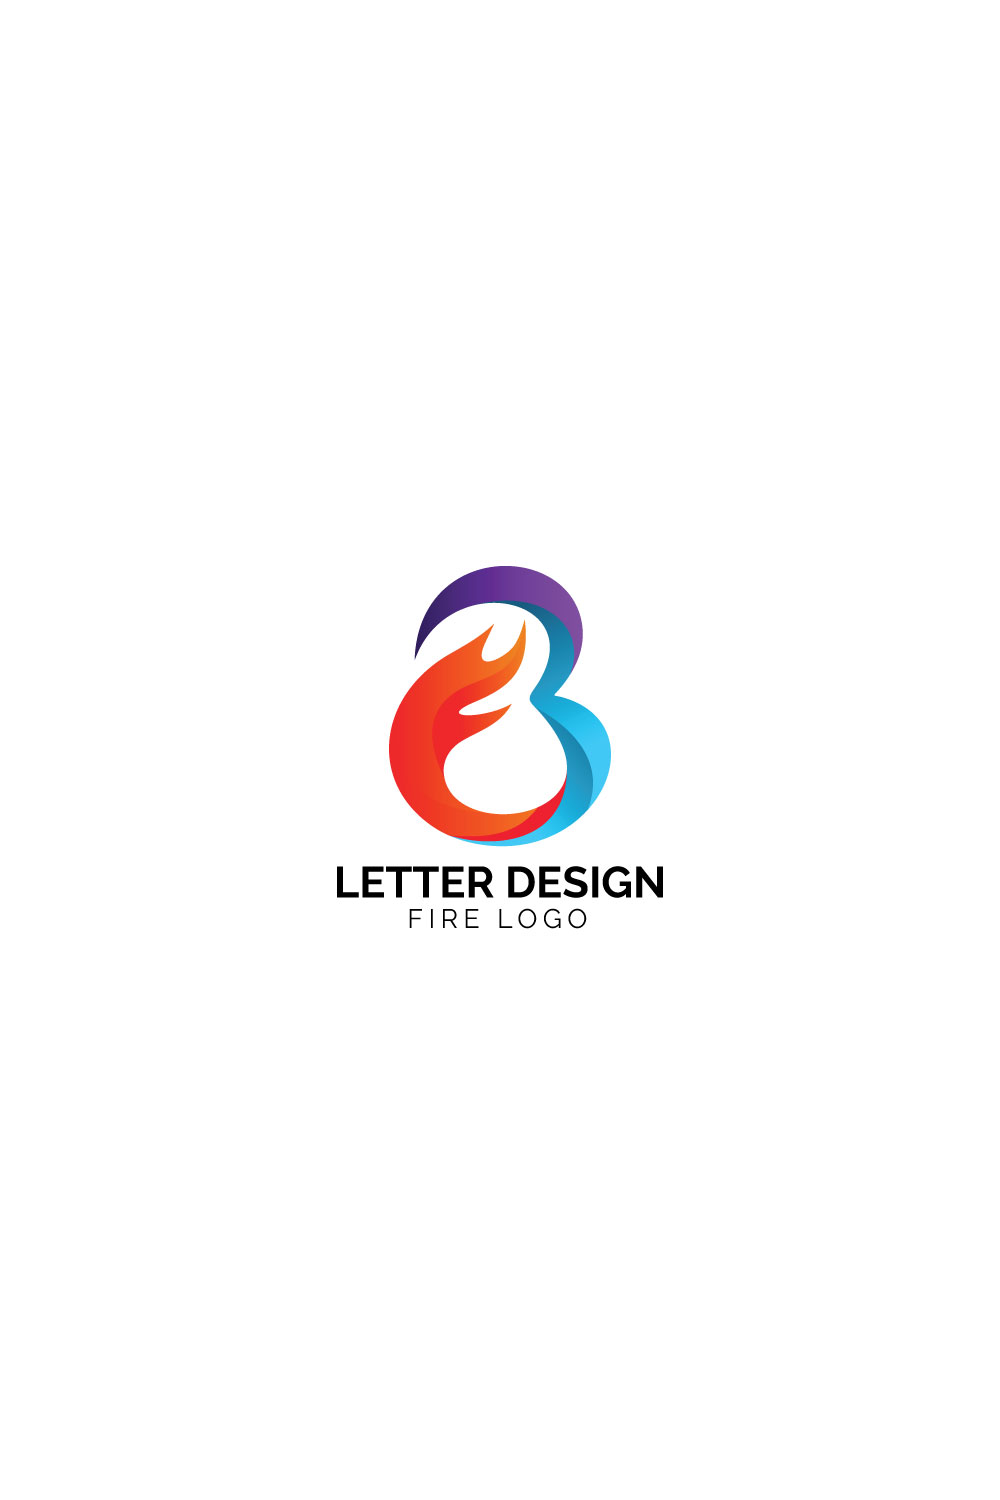 Initial Letter B Fire Concept Logo  pinterest preview image.